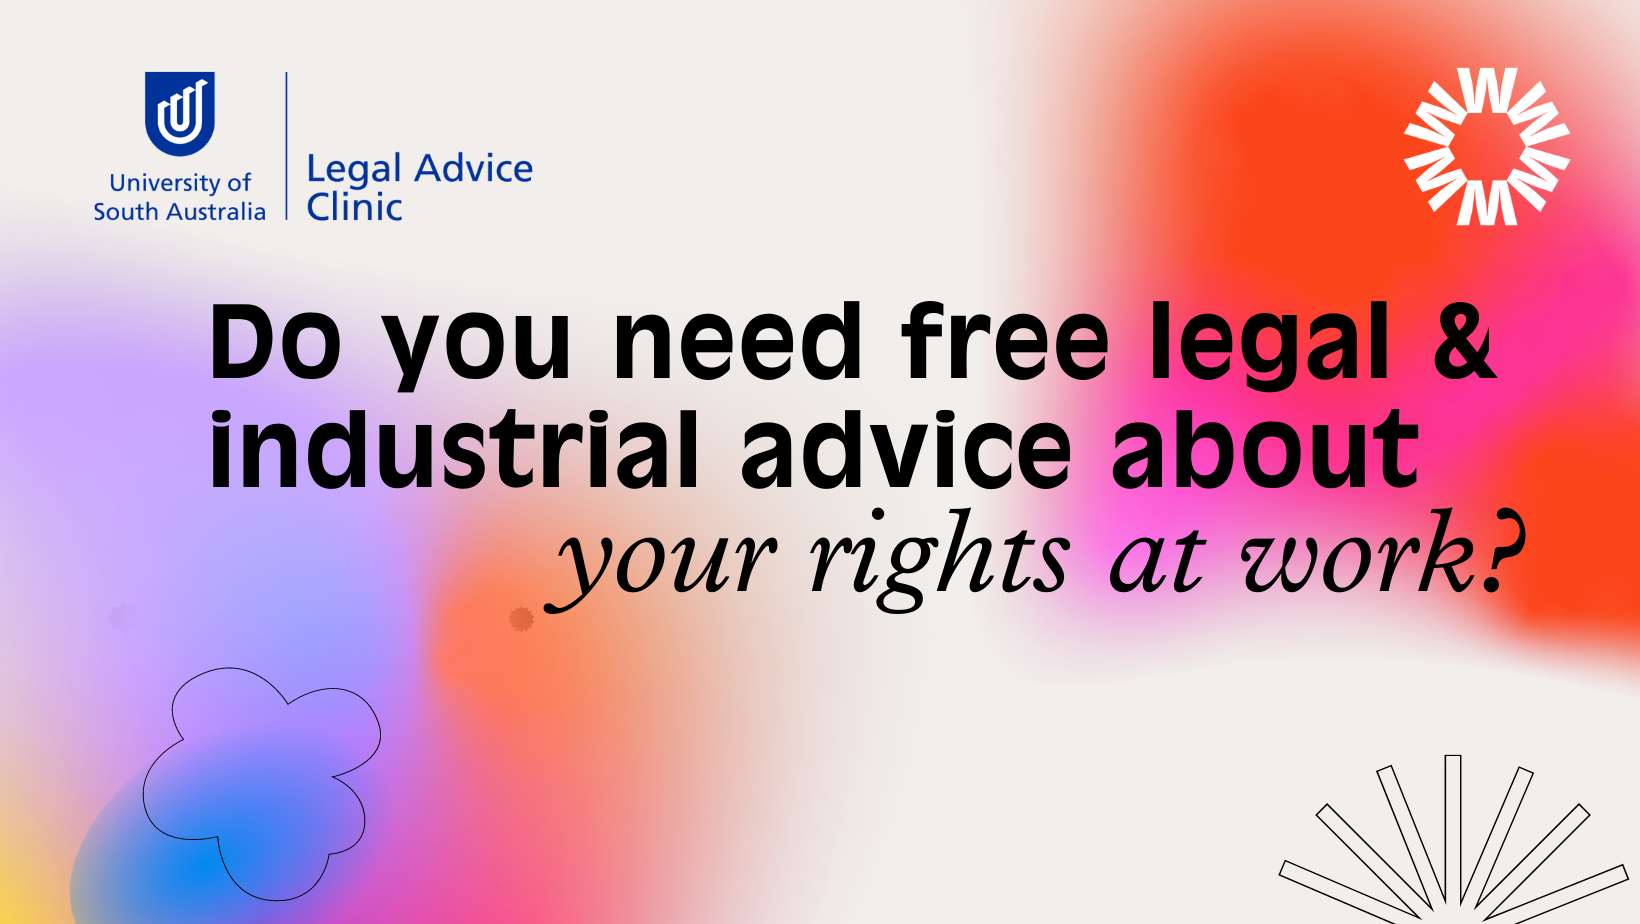 UniSA Legal Advice Clinic